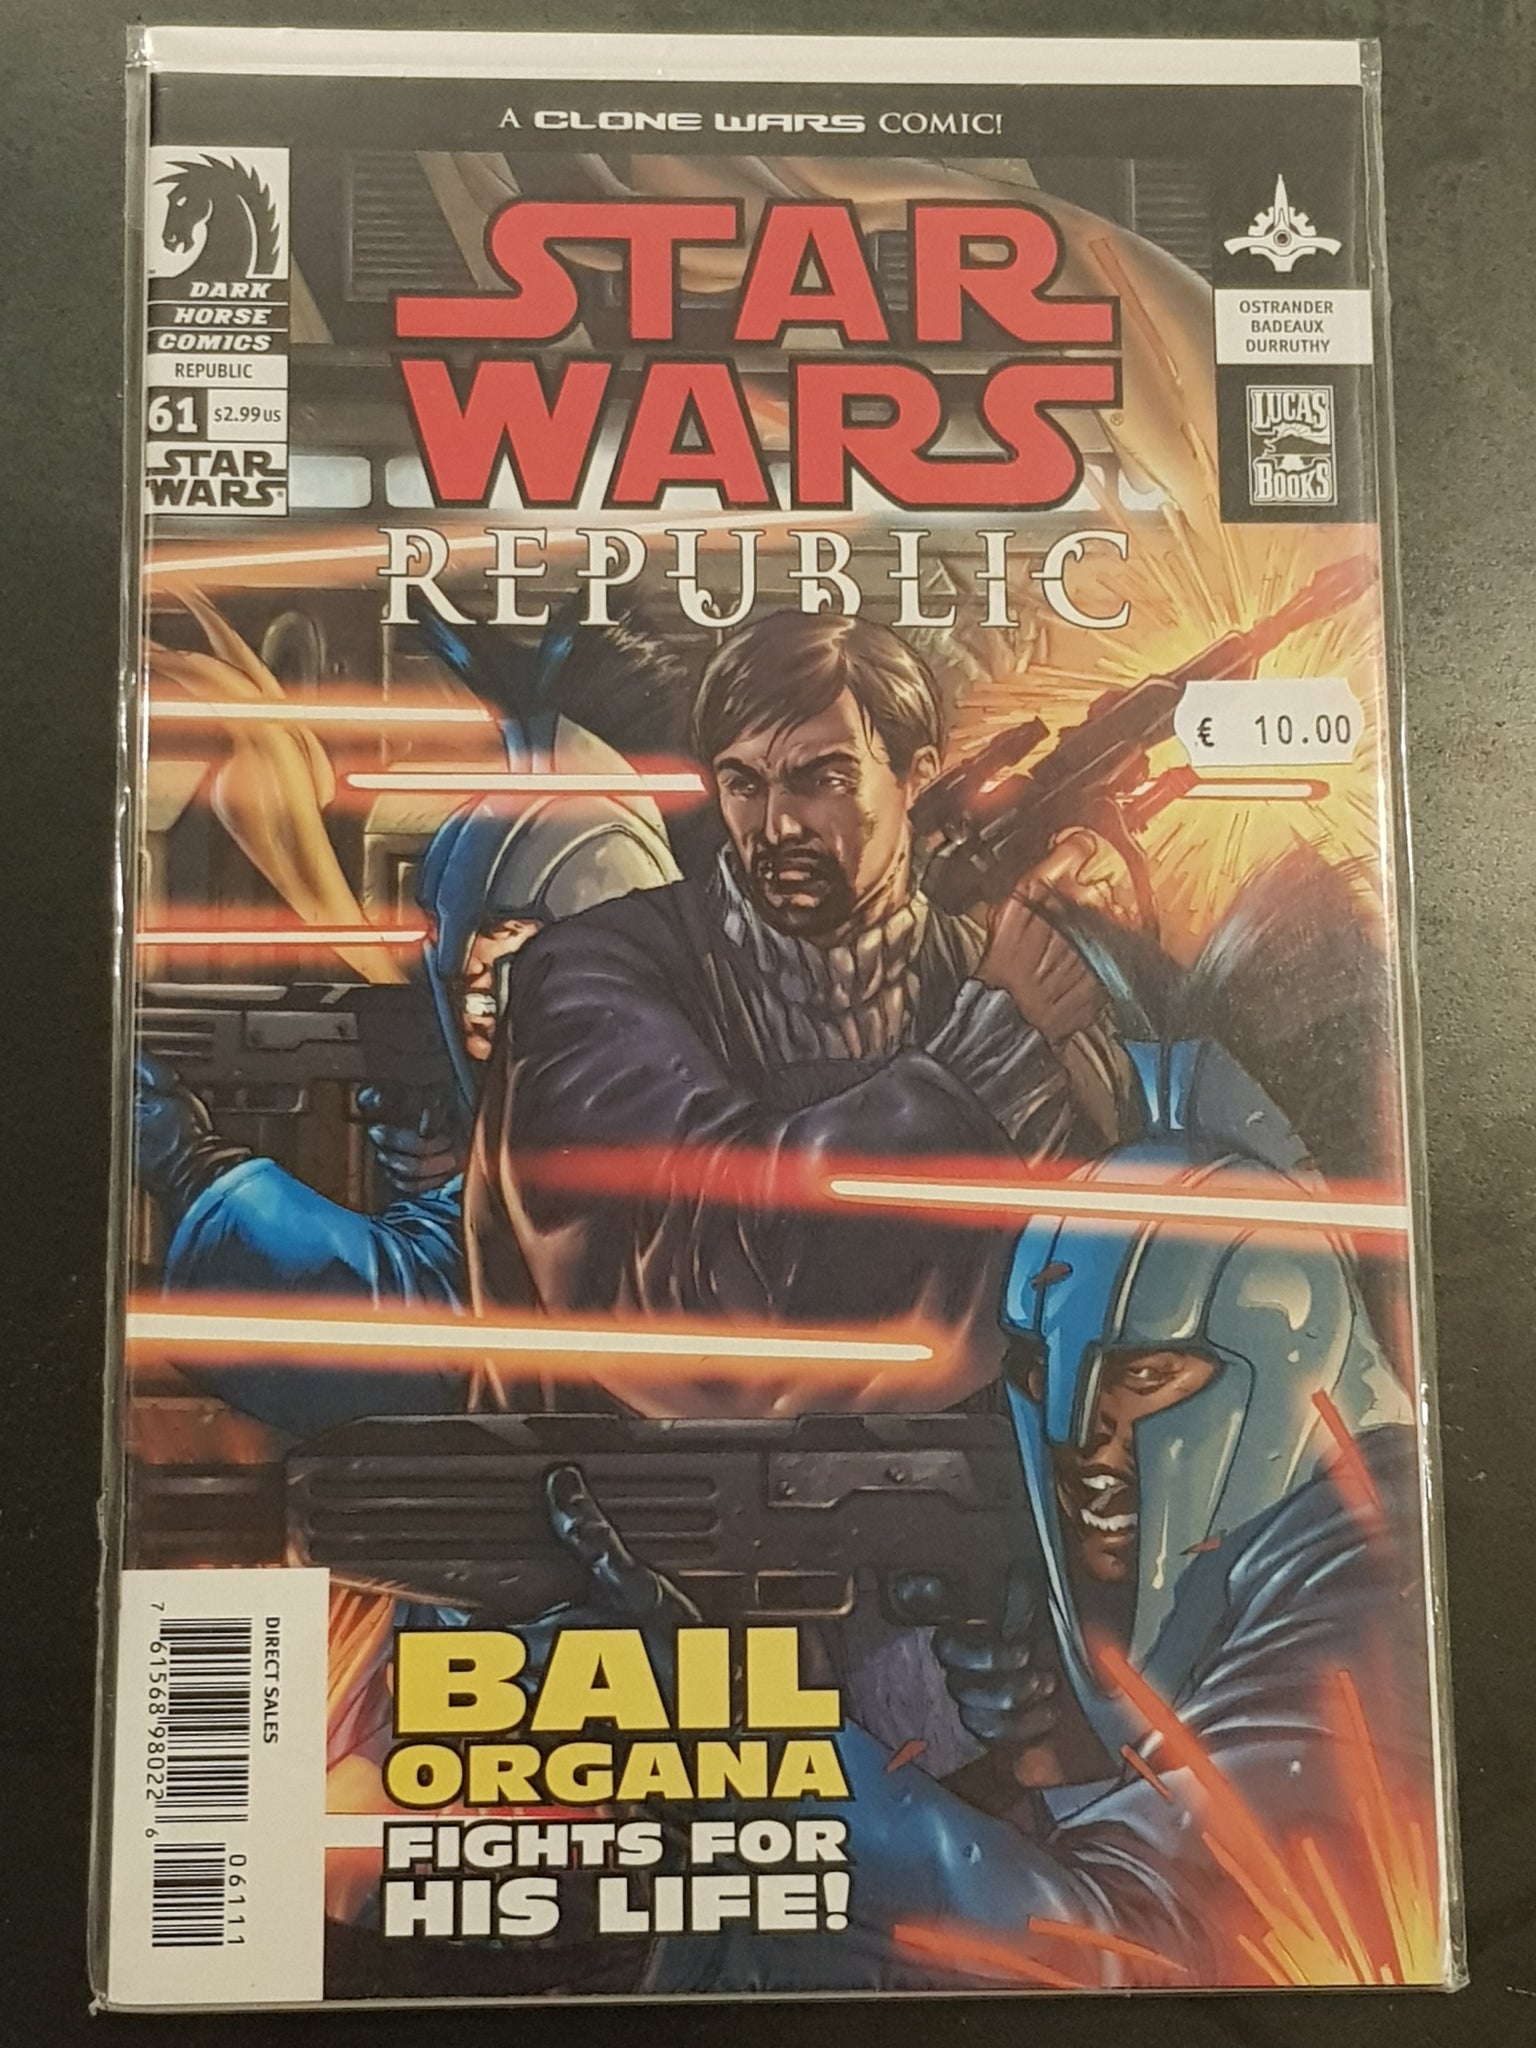 Star Wars (Republic) #61 VF/NM